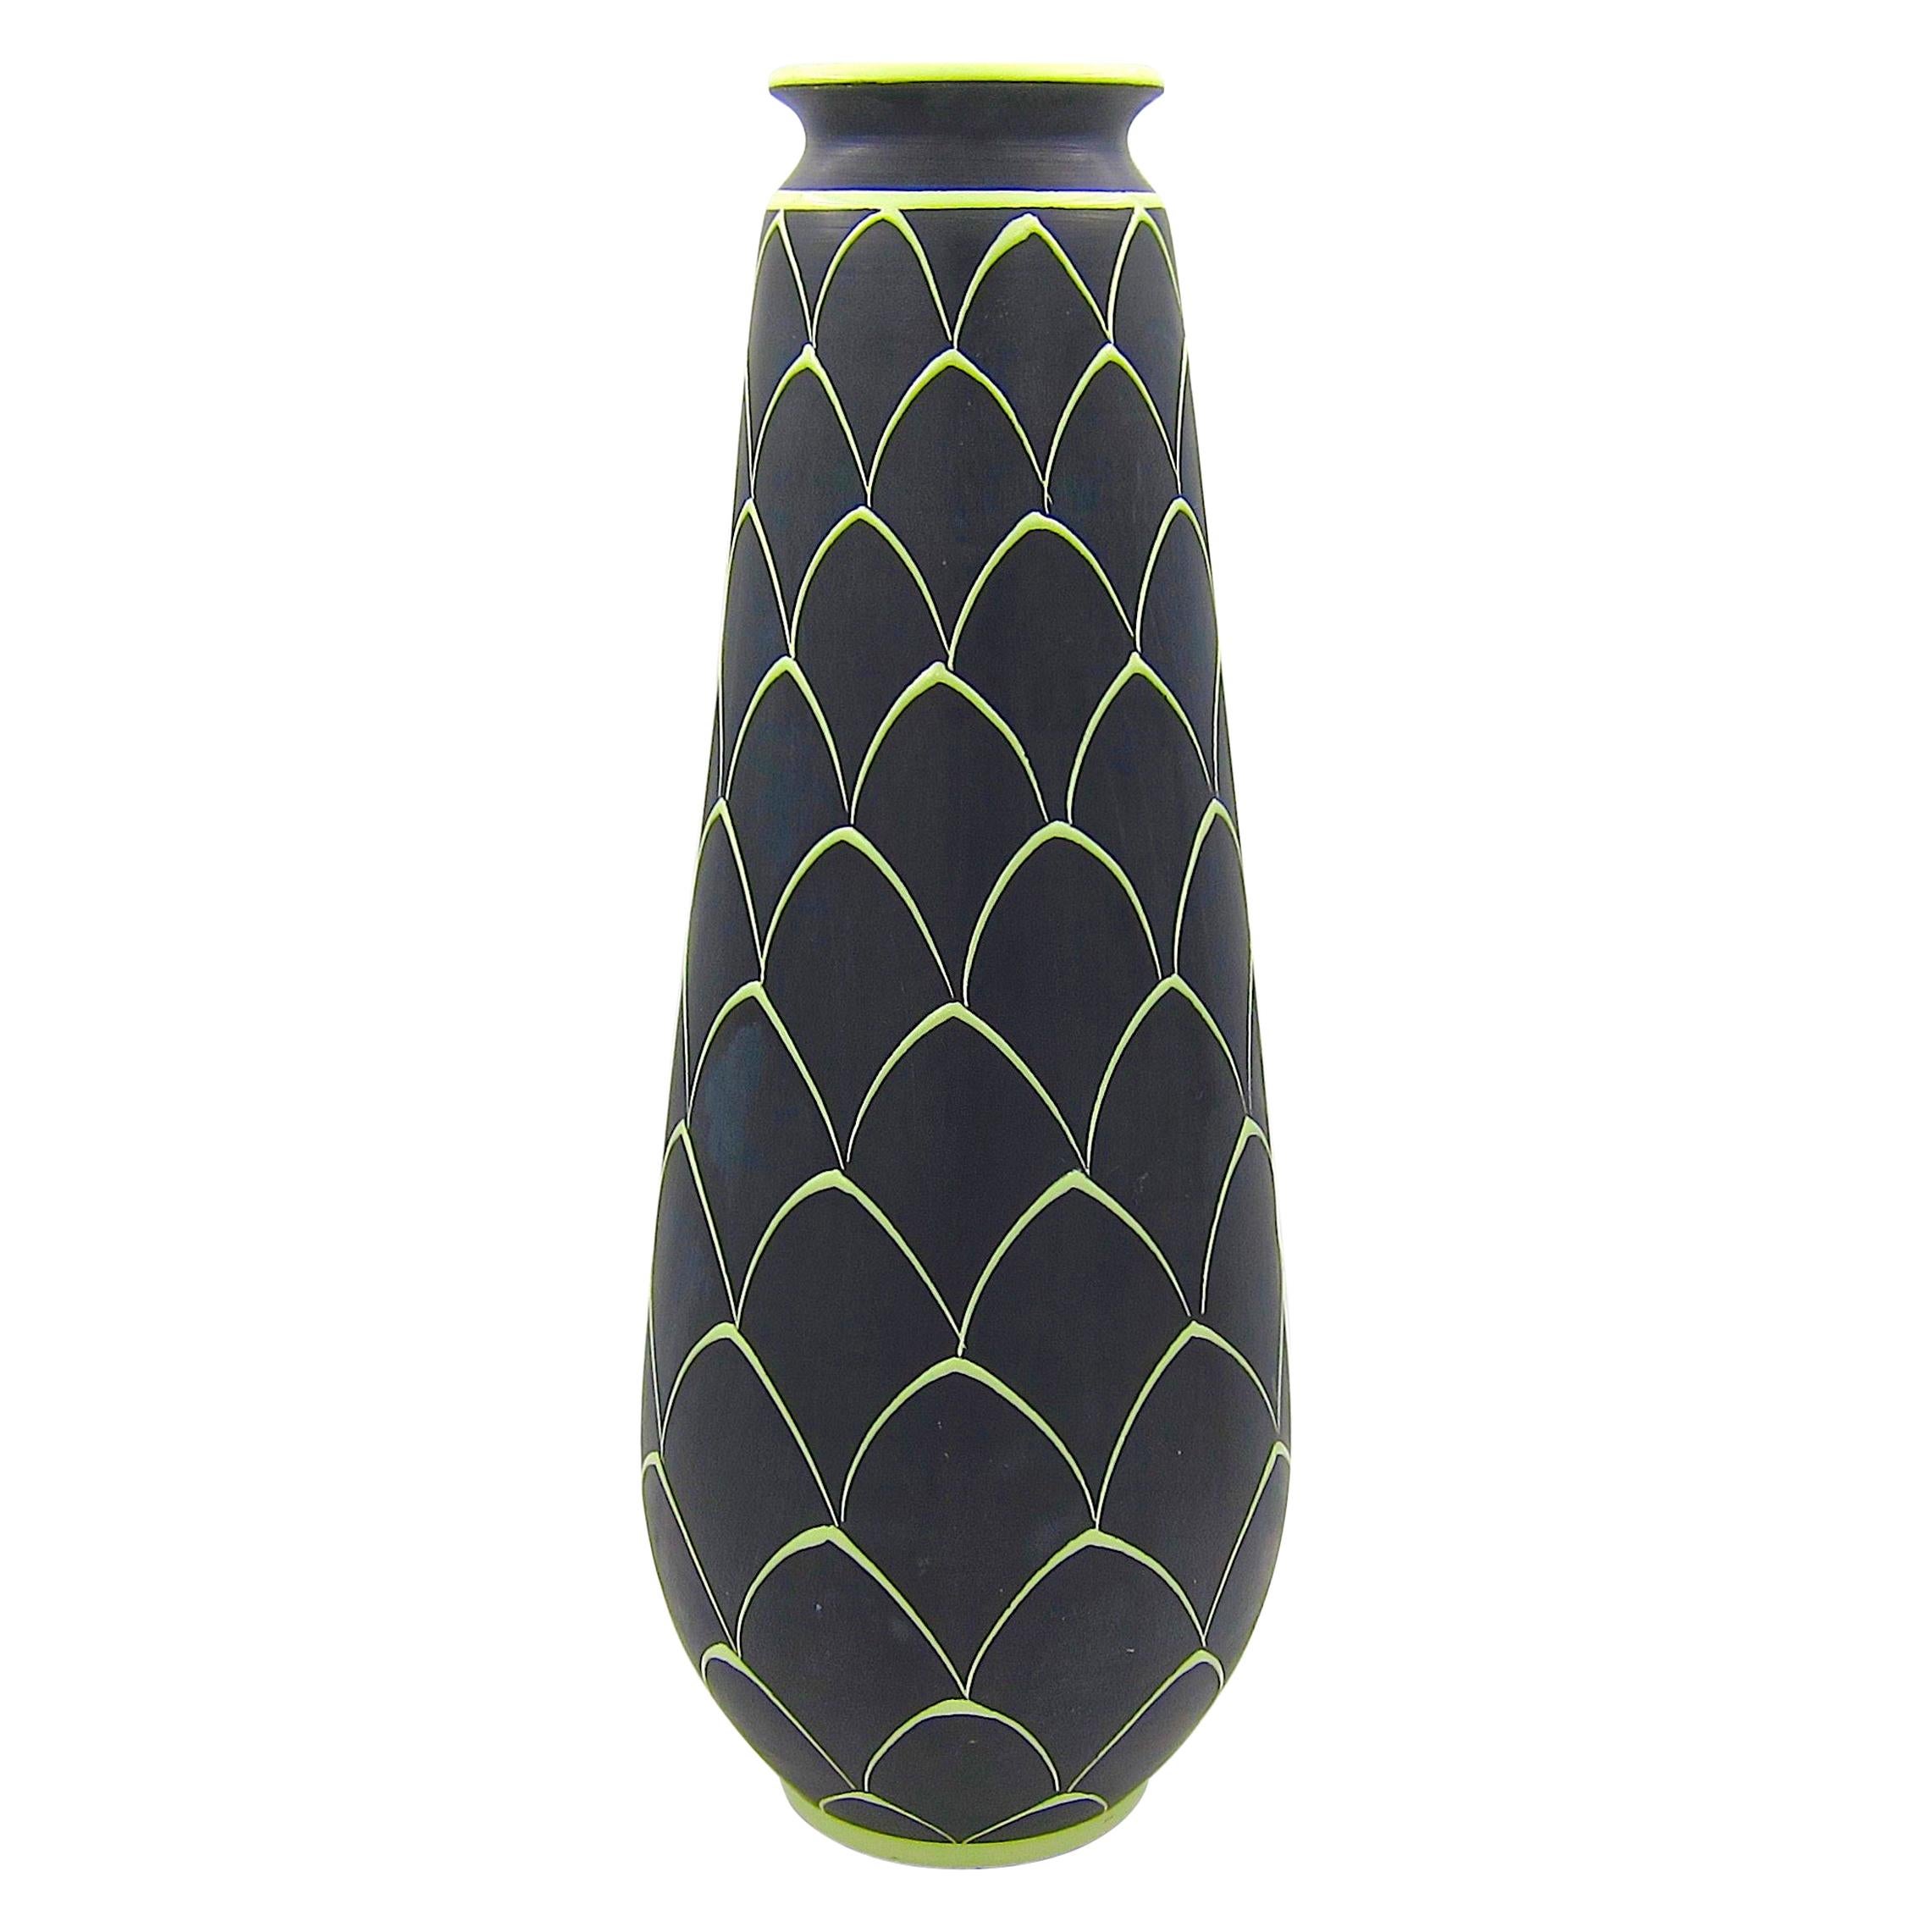 Norwegian Larholm Keramikk Scandinavian Modern Vase in Black and Green, 1950s